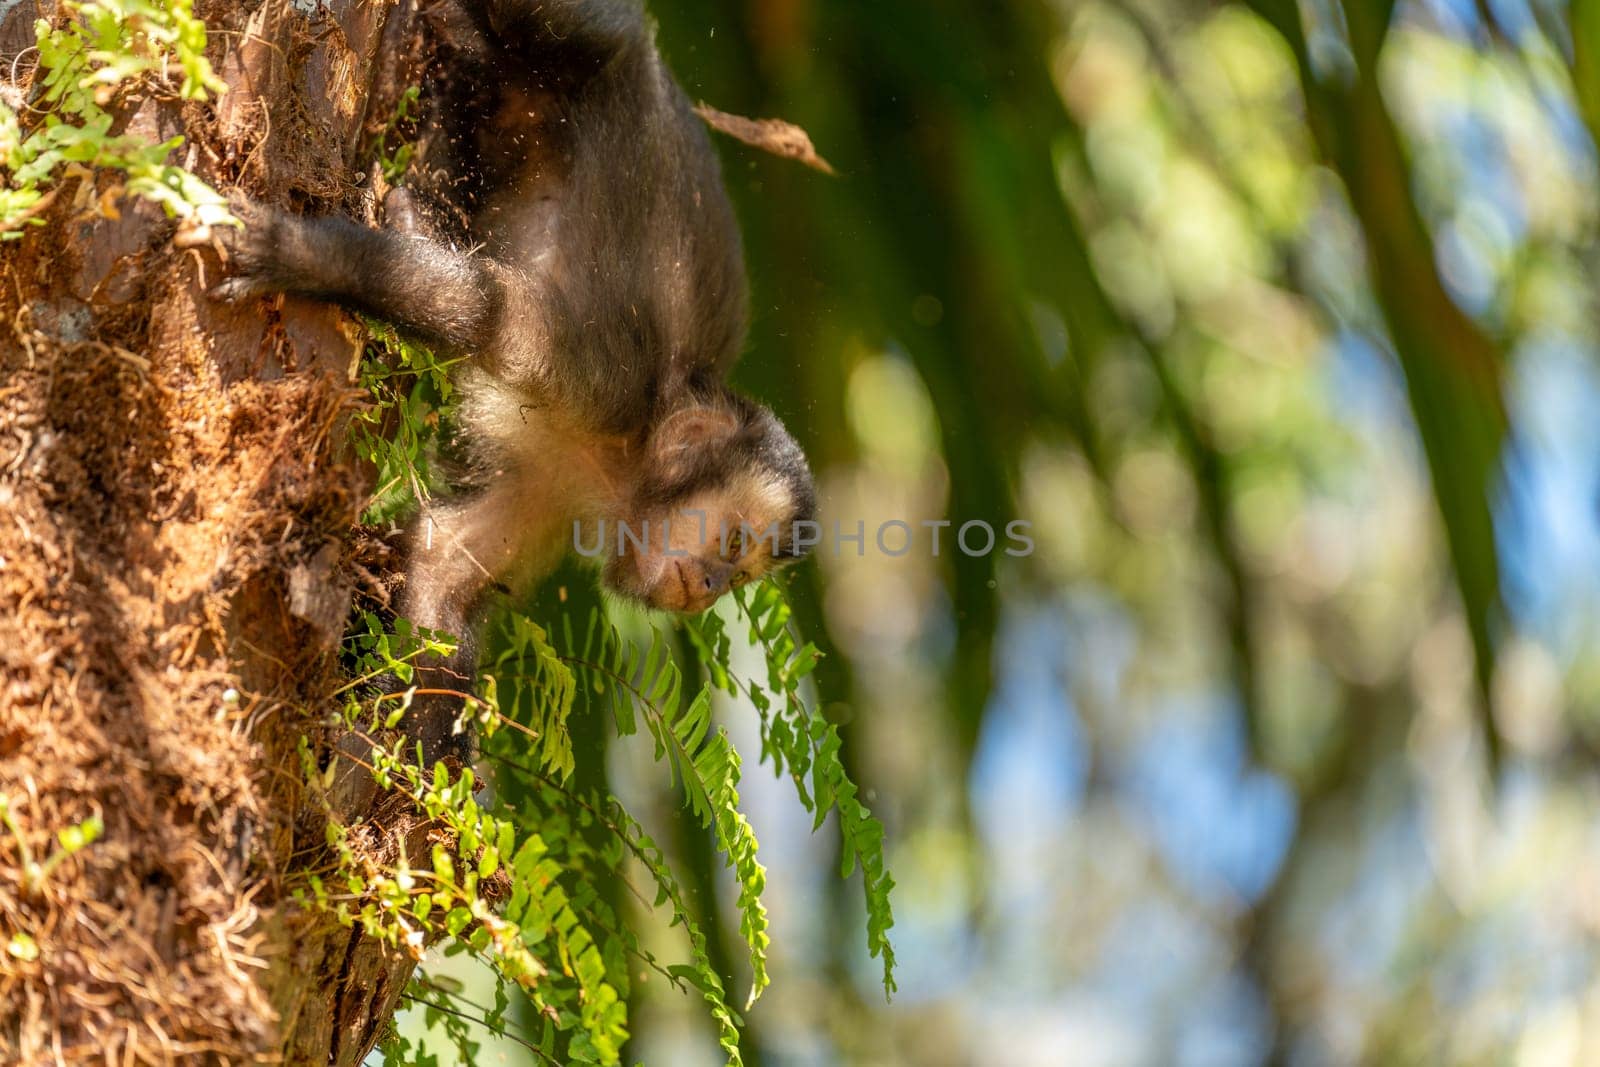 Curious Capuchin Monkey Exploring a Tropical Tree by FerradalFCG